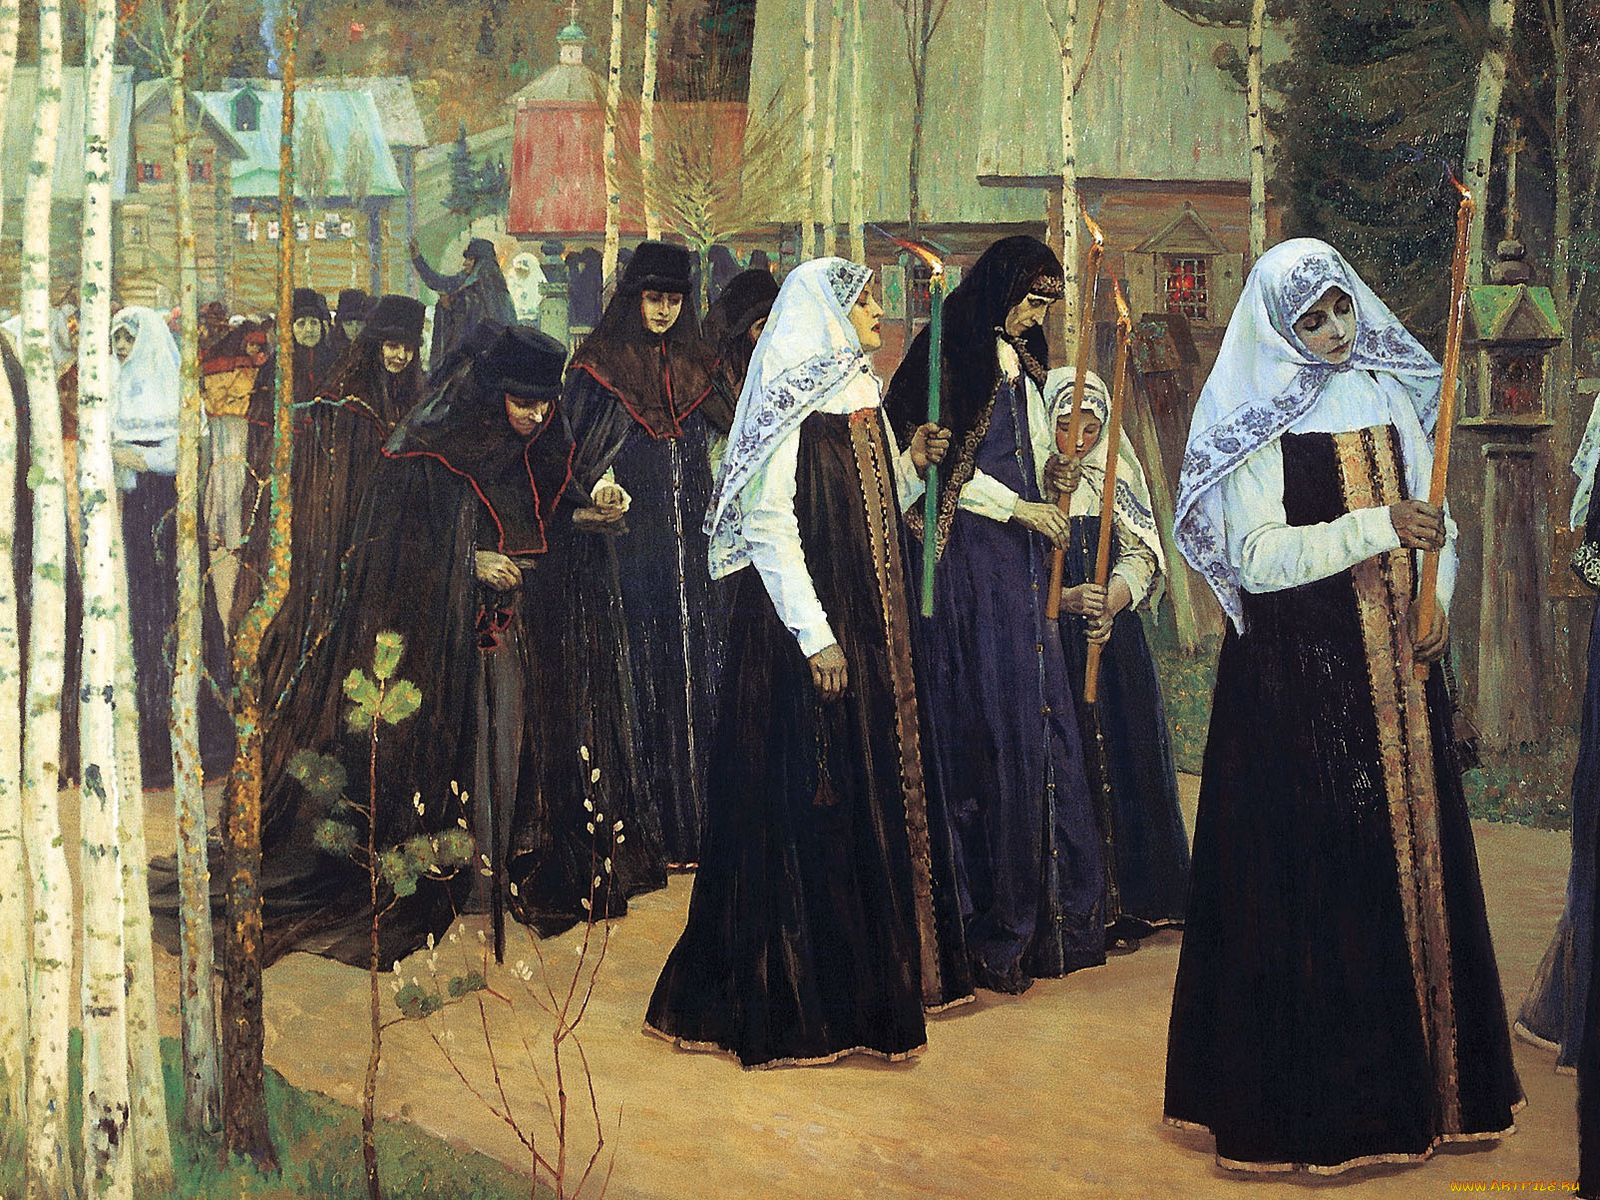 Картина вдова. Великий постриг картина Нестерова. М.В.Нестеров (1862–1942 гг.), «Великий постриг», 1898.